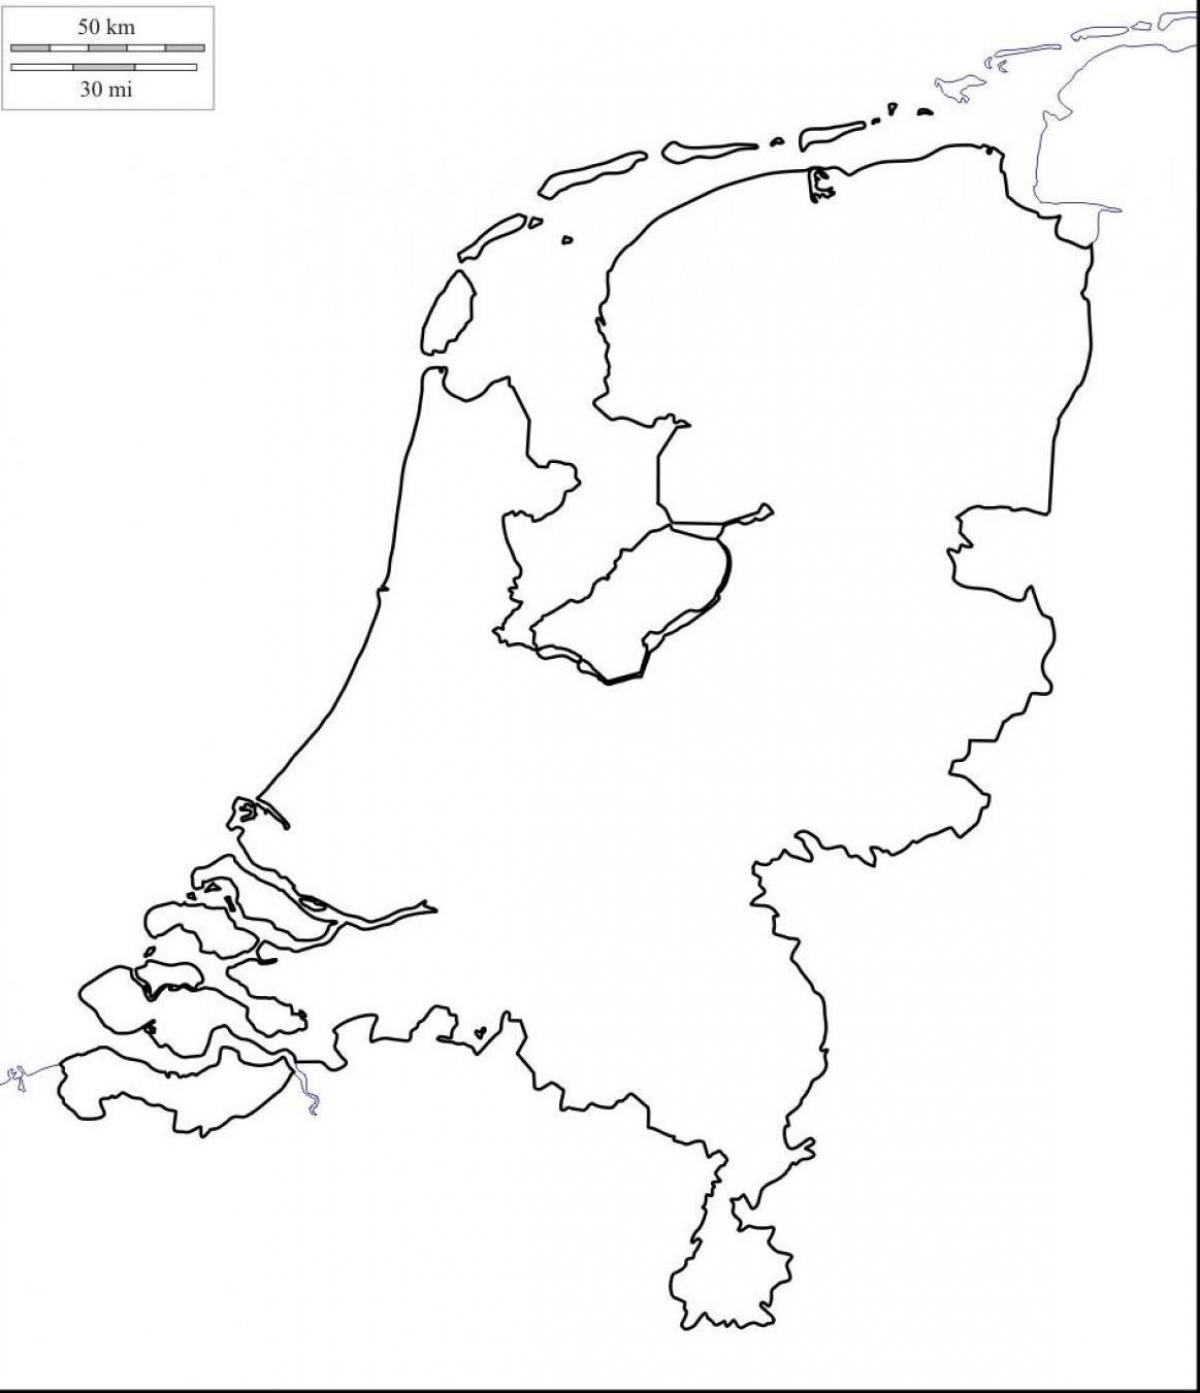 Mapa vazio dos Países Baixos